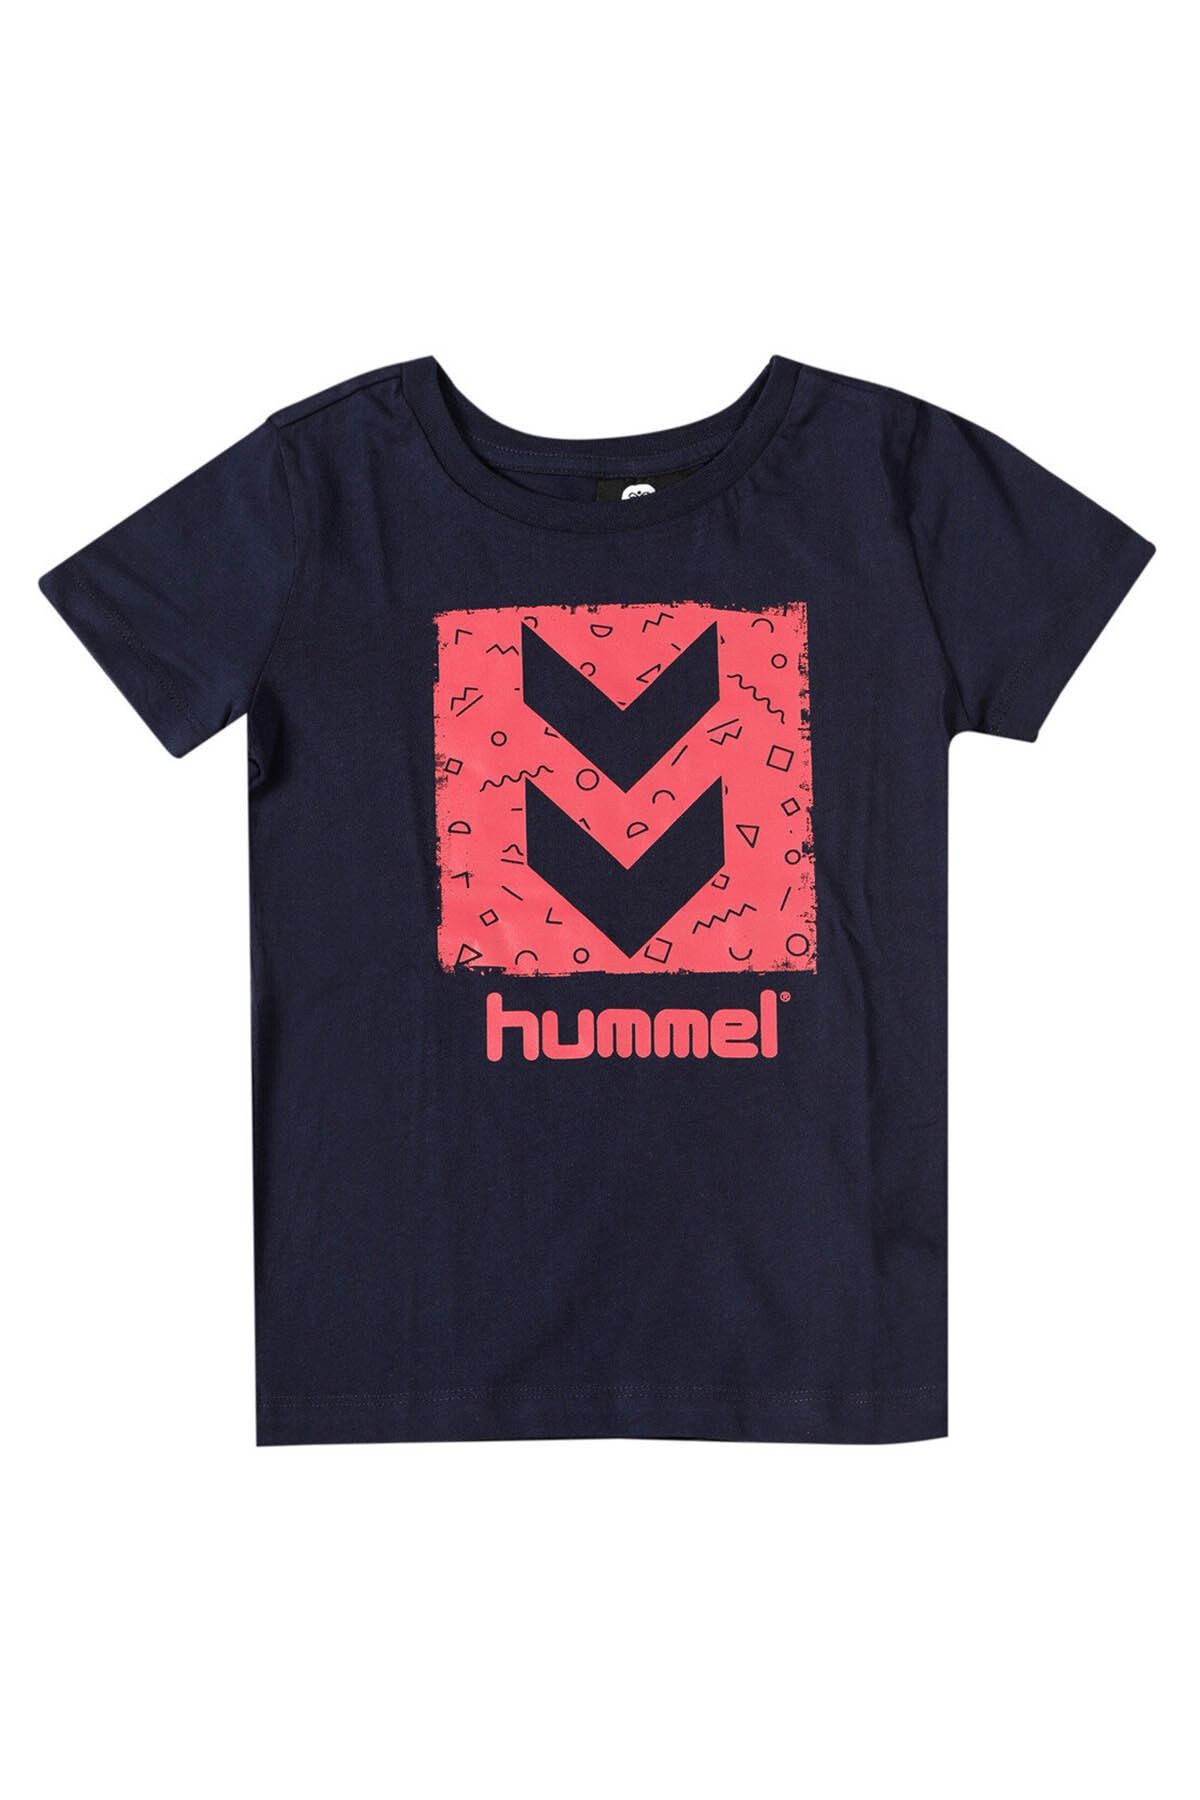 hummel HMLCALINA  T-SHIRT S/S Lacivert Kız Çocuk T-Shirt 100580996